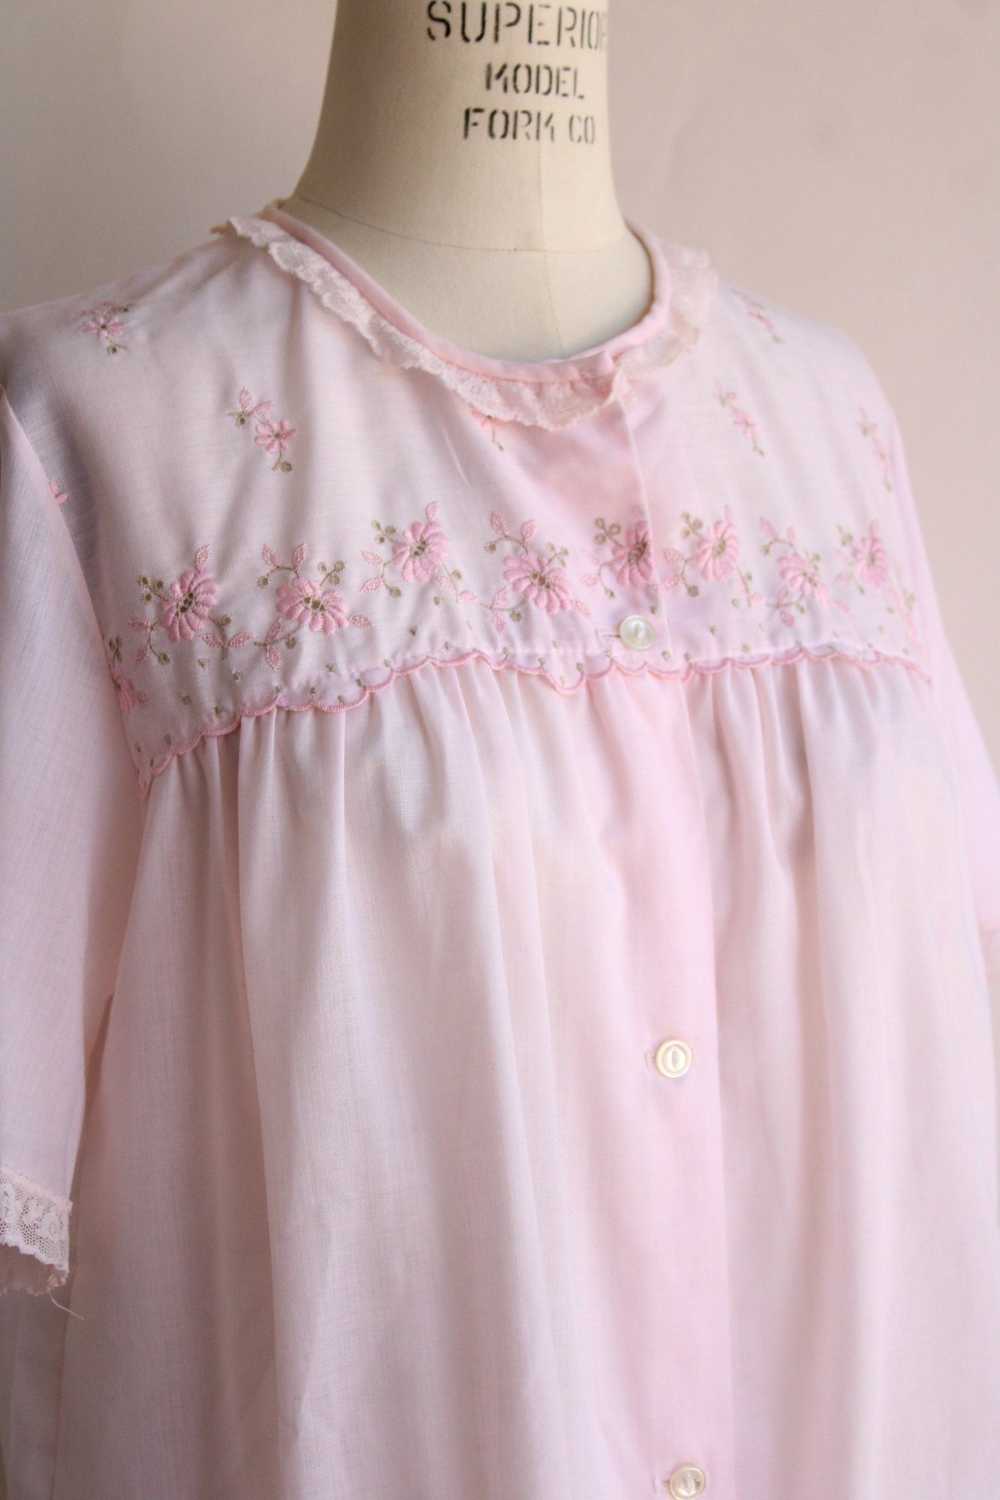 Vintage 1970s Sears Pink Floral Embroidered PJ Top - image 5